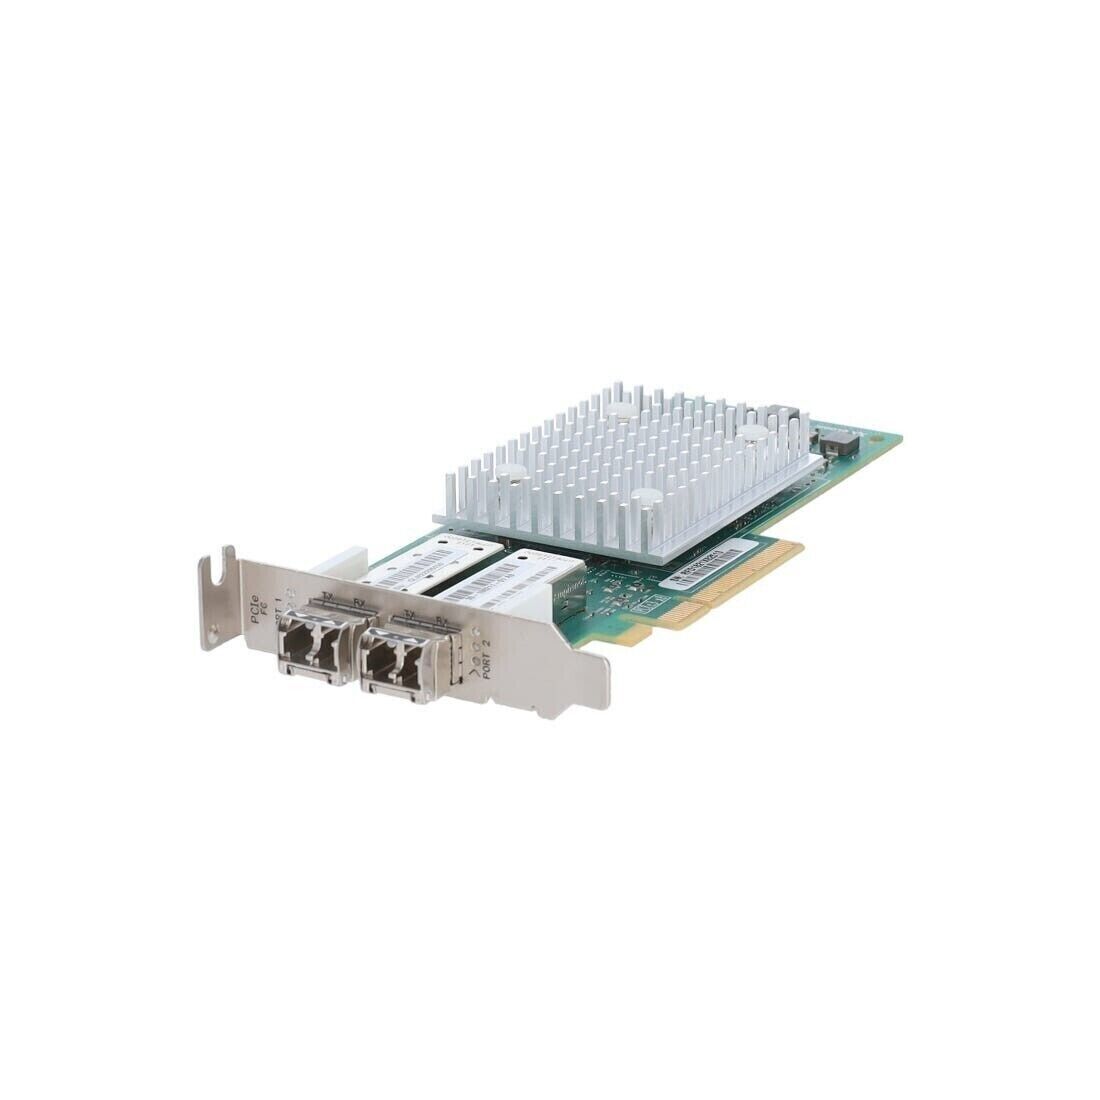 Qlogic Cisco QLE2692 Dual Port 16Gb FC PCIe Adapter with 2 x 16GB/s SFP HH+FH